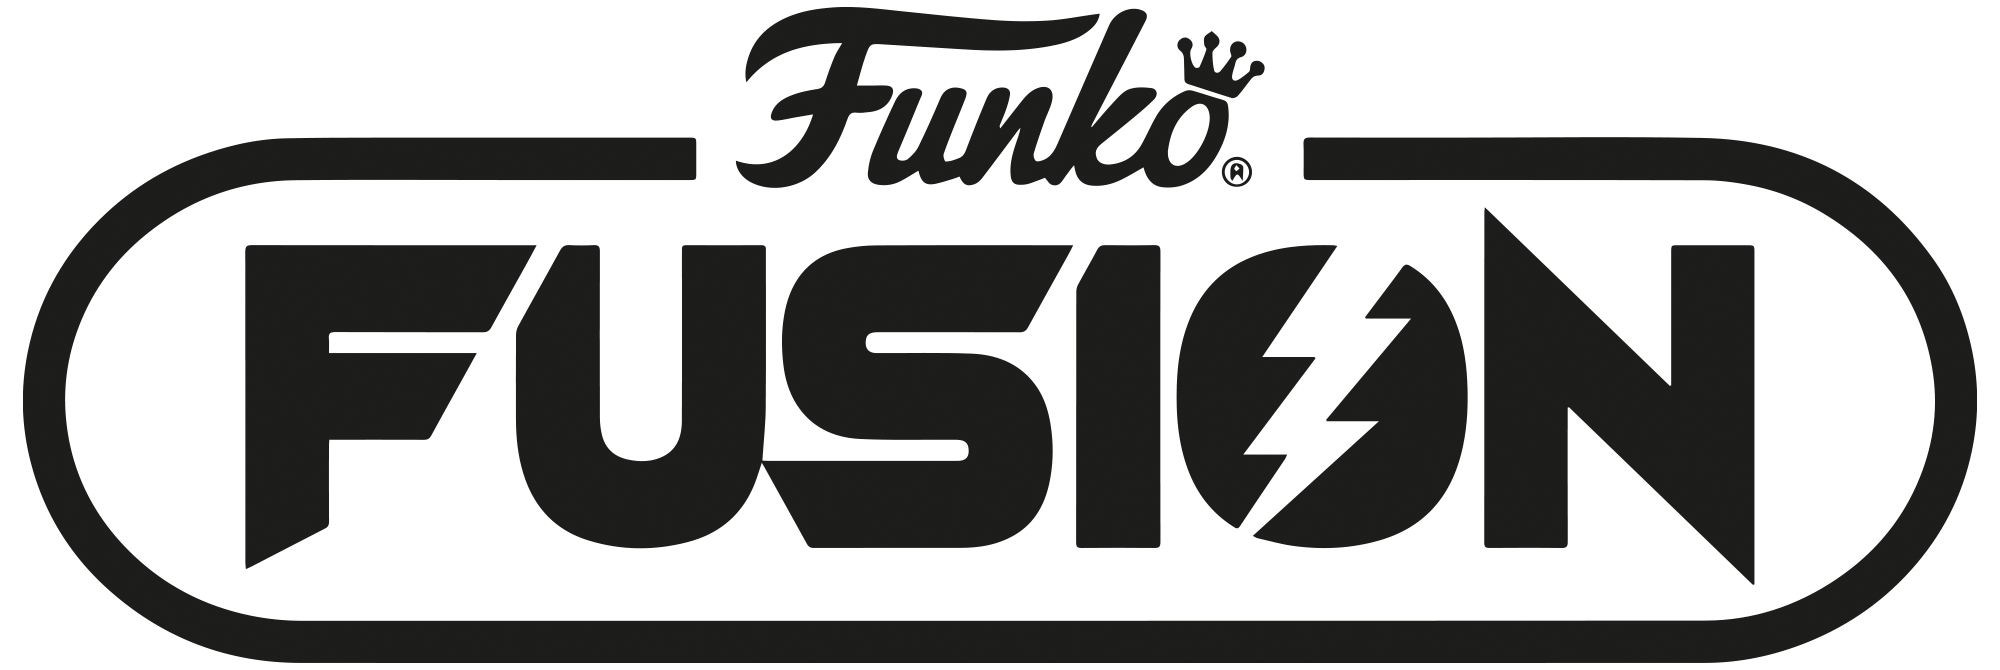 fusion | Logo design by Đorđe Vukojević on Dribbble